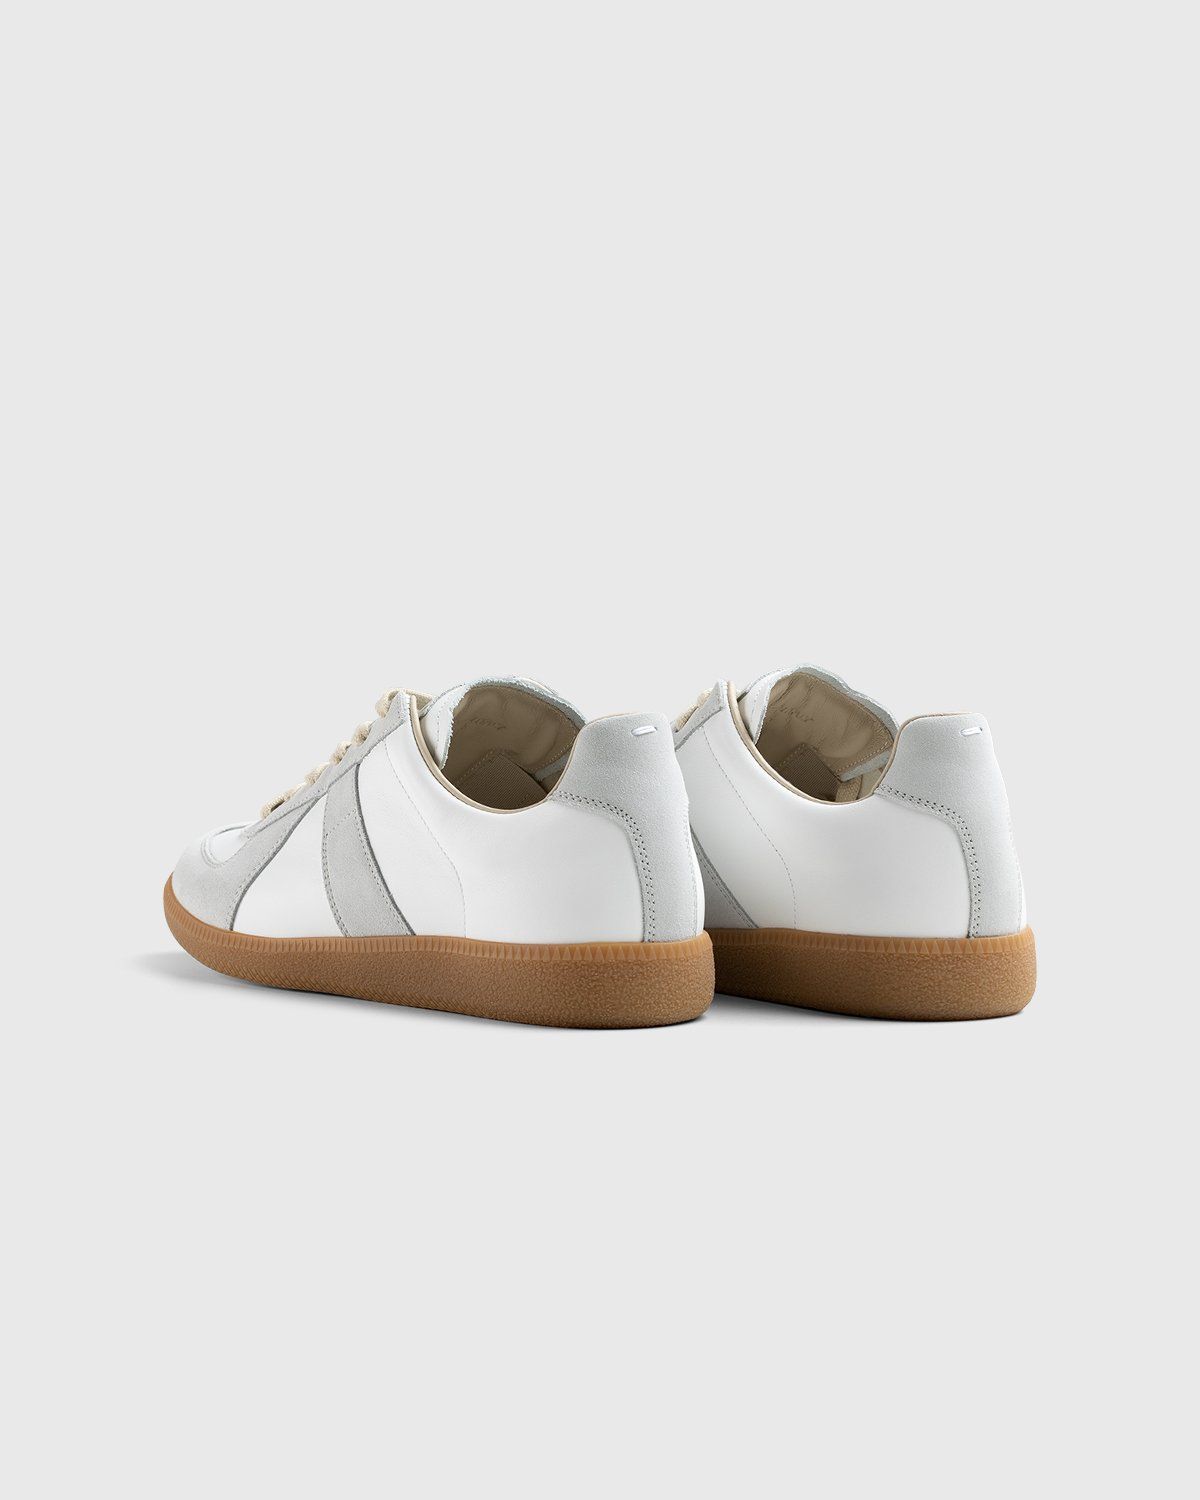 Maison Margiela – Calfskin Replica Sneakers Light Grey - Low Top Sneakers - Grey - Image 3